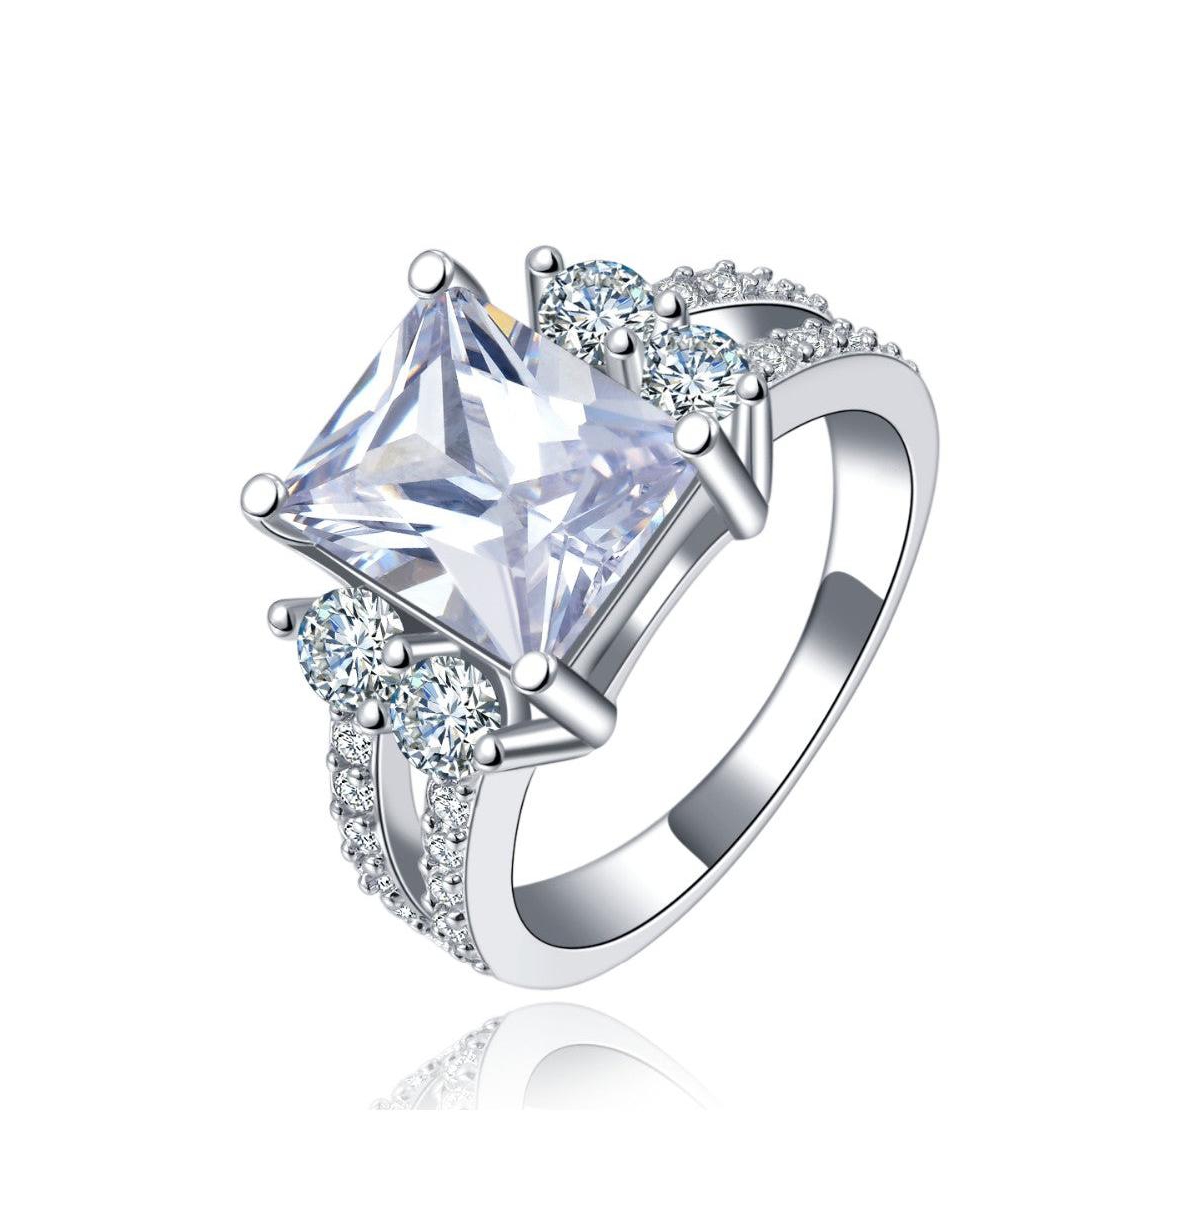 Princess Cut Cubic Zirconia Ring for Women - Silver